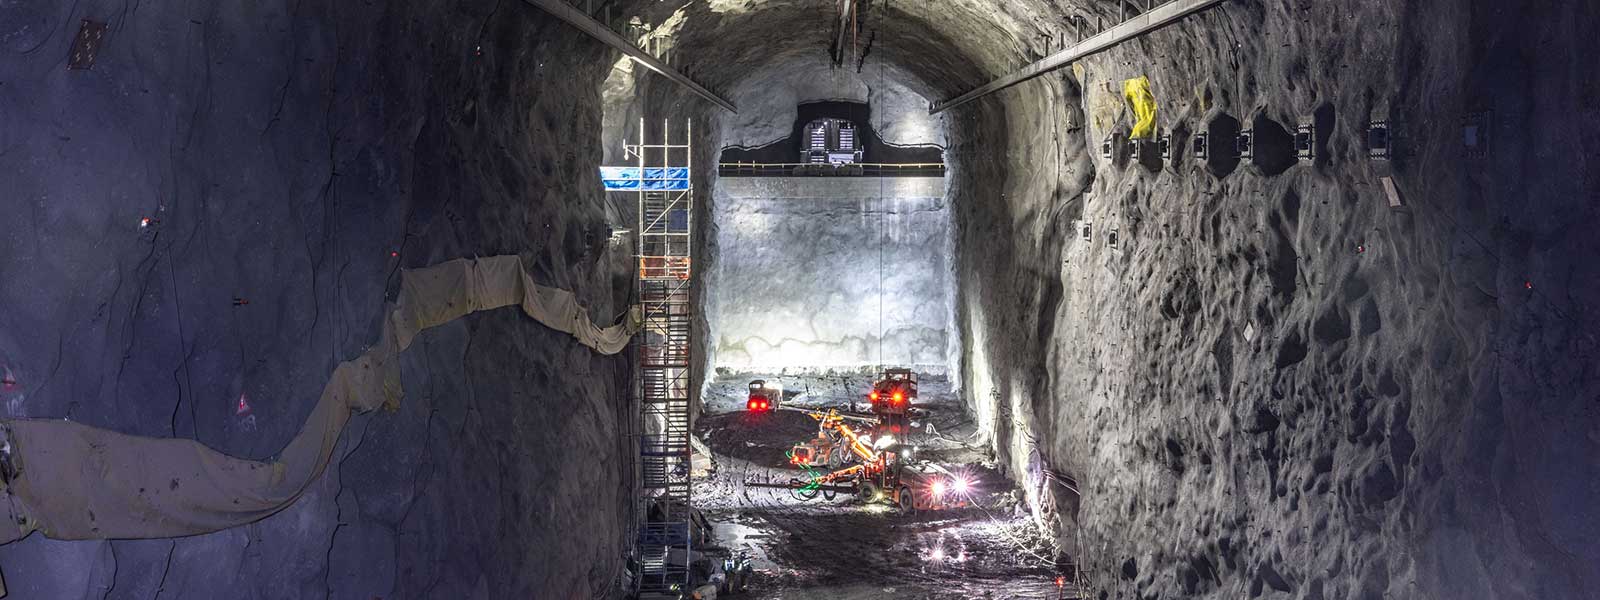 photo of a massive underground cavern